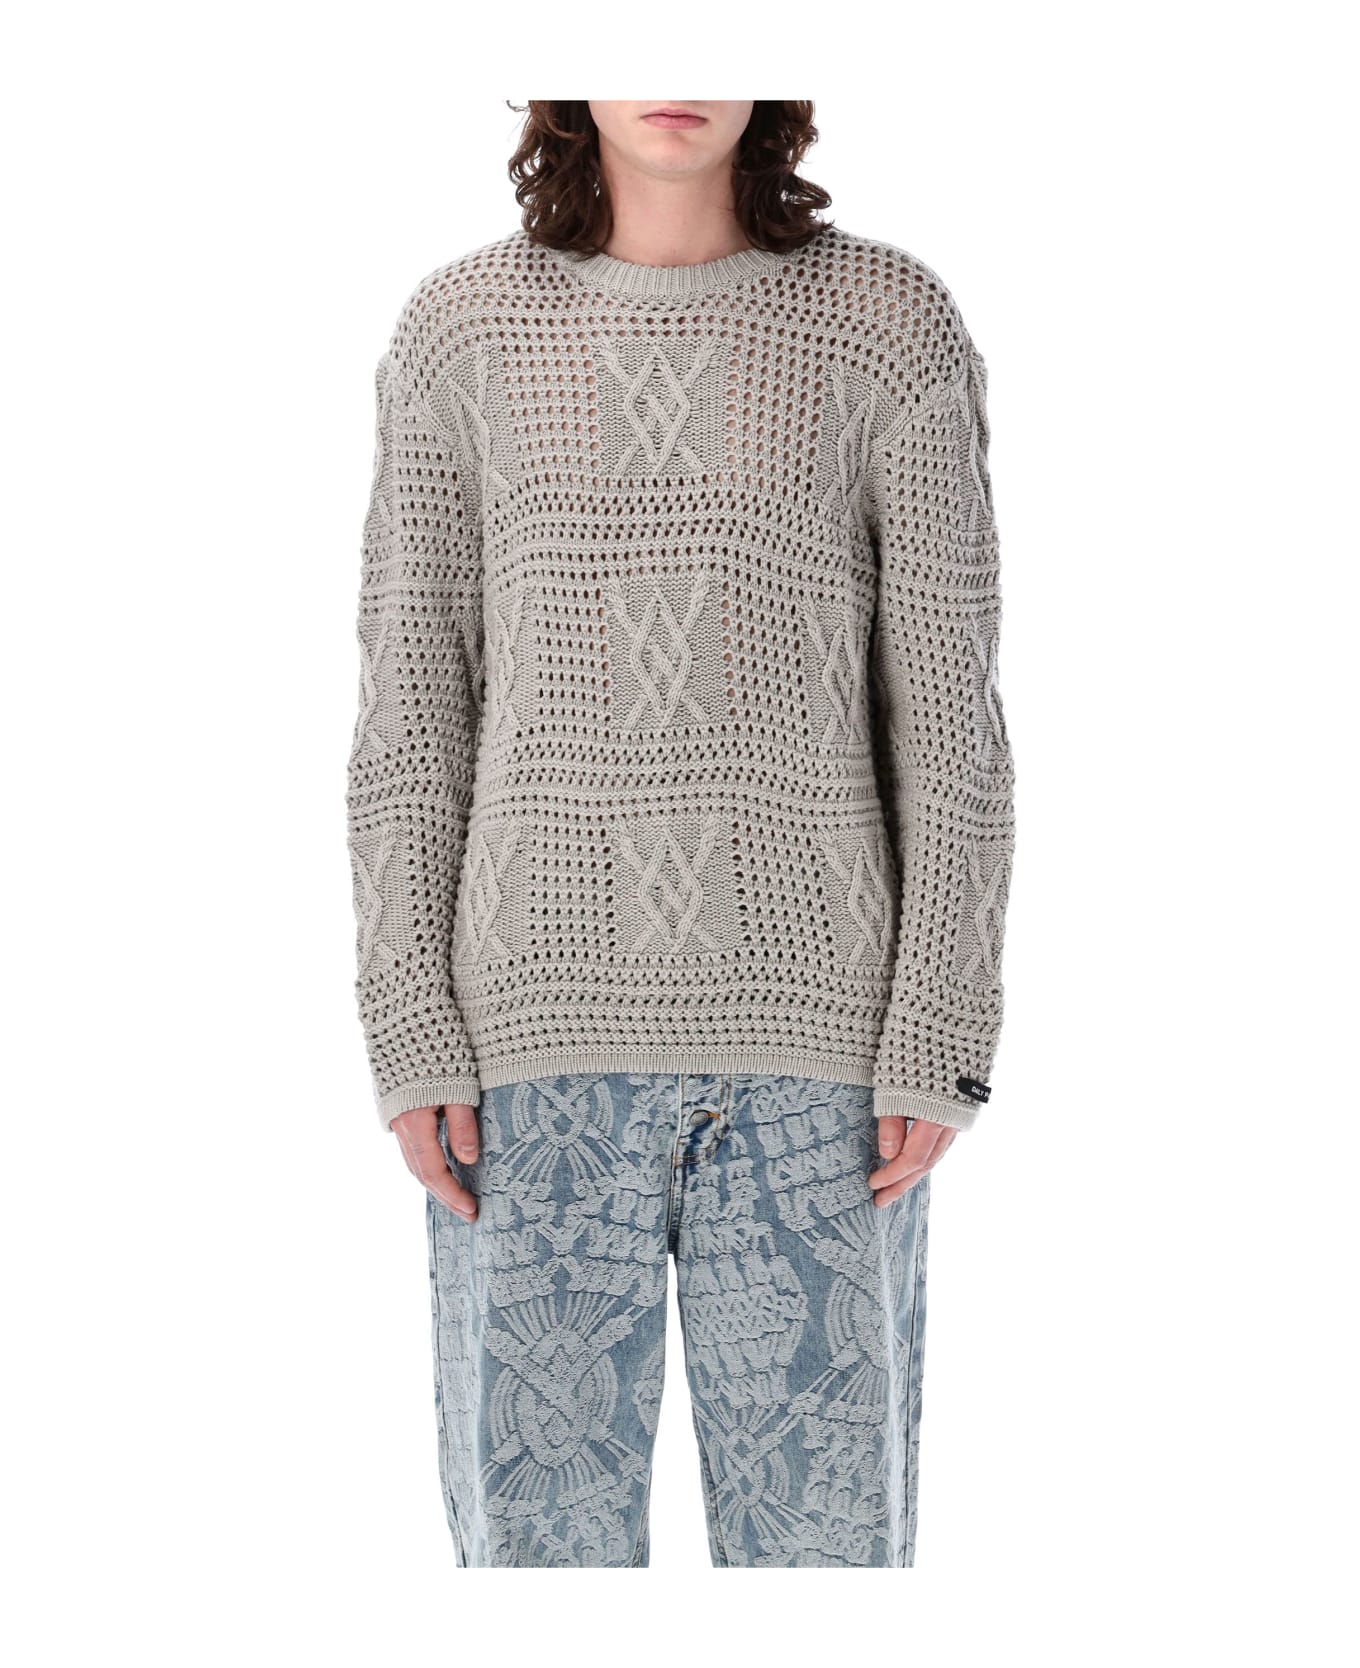 Daily Paper Zuberi Crochet Sweater - MOONSTRACK GREY